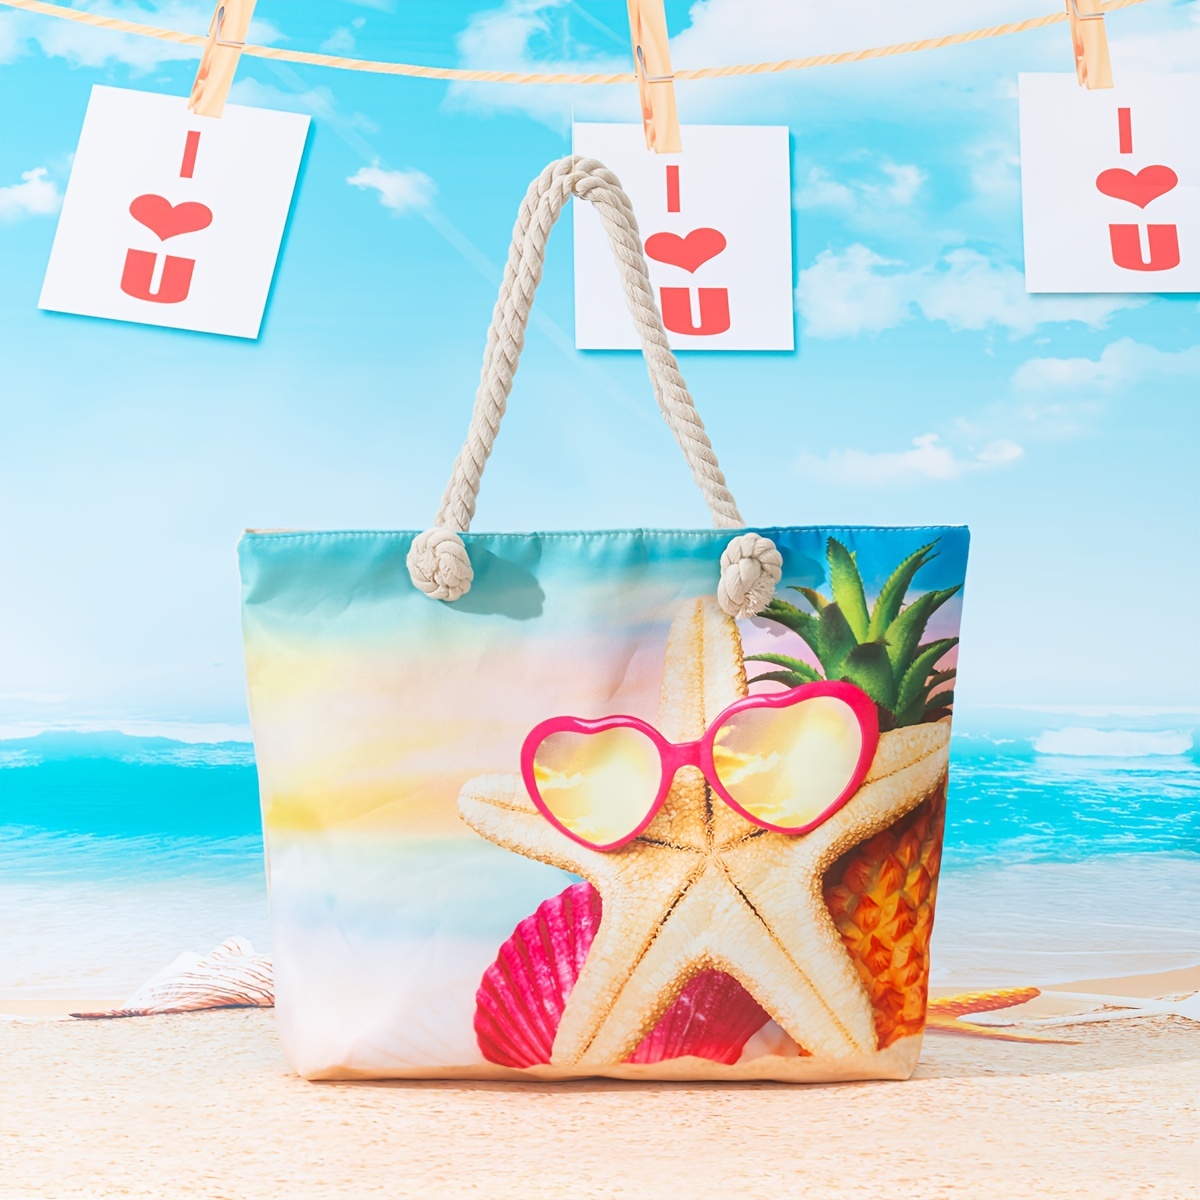 

Large Summer Beach Tote Bag For Women, Nylon Shoulder Bag With Vibrant Seashell, Flip Flops Print, Casual Shopping Bag